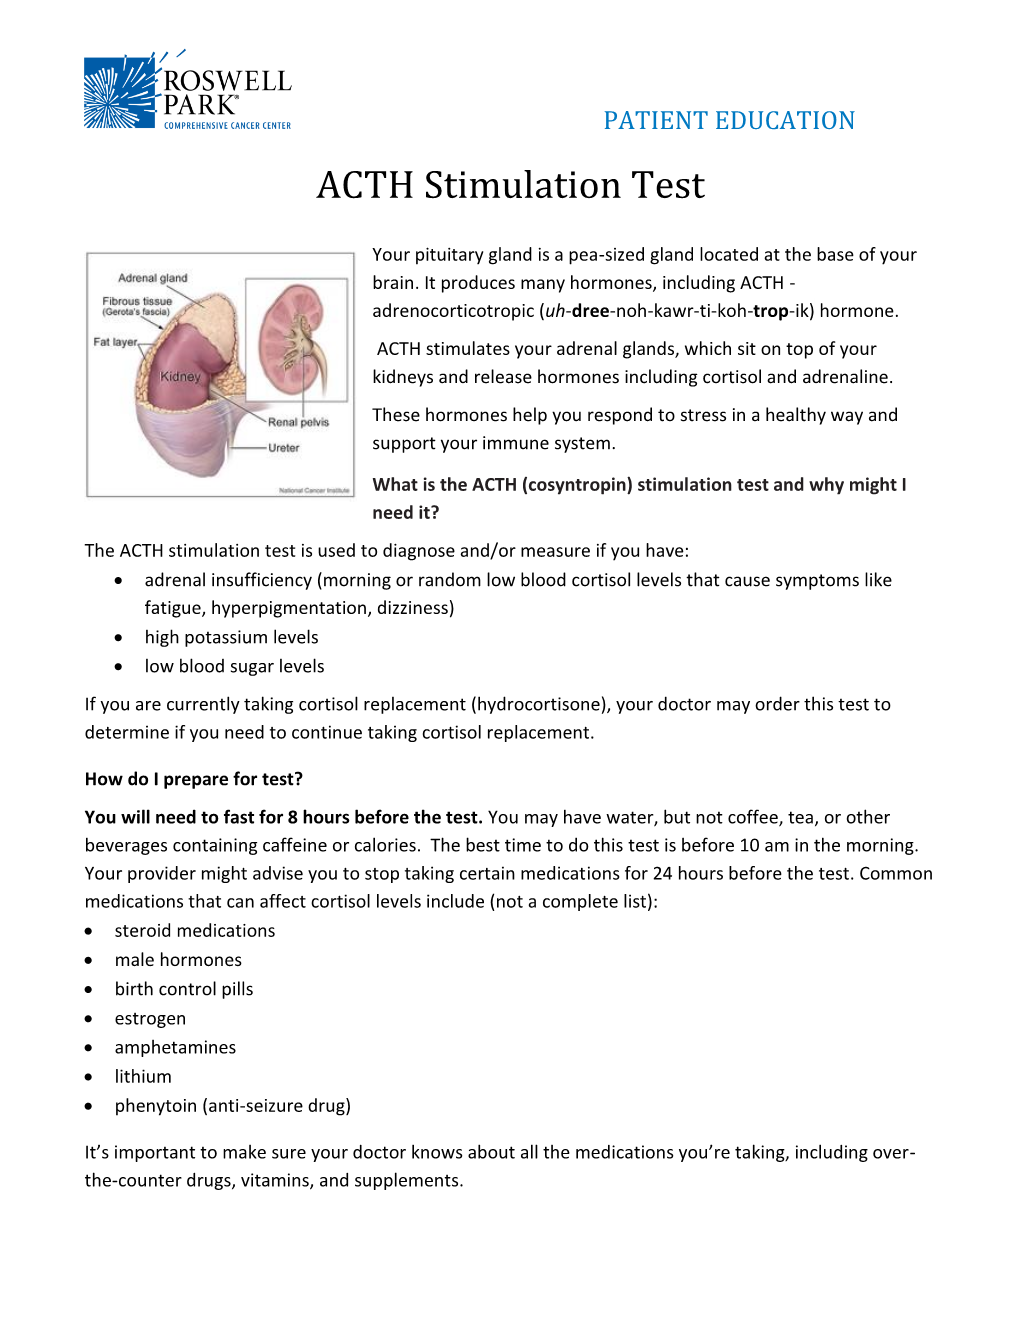 ACTH Stimulation Test